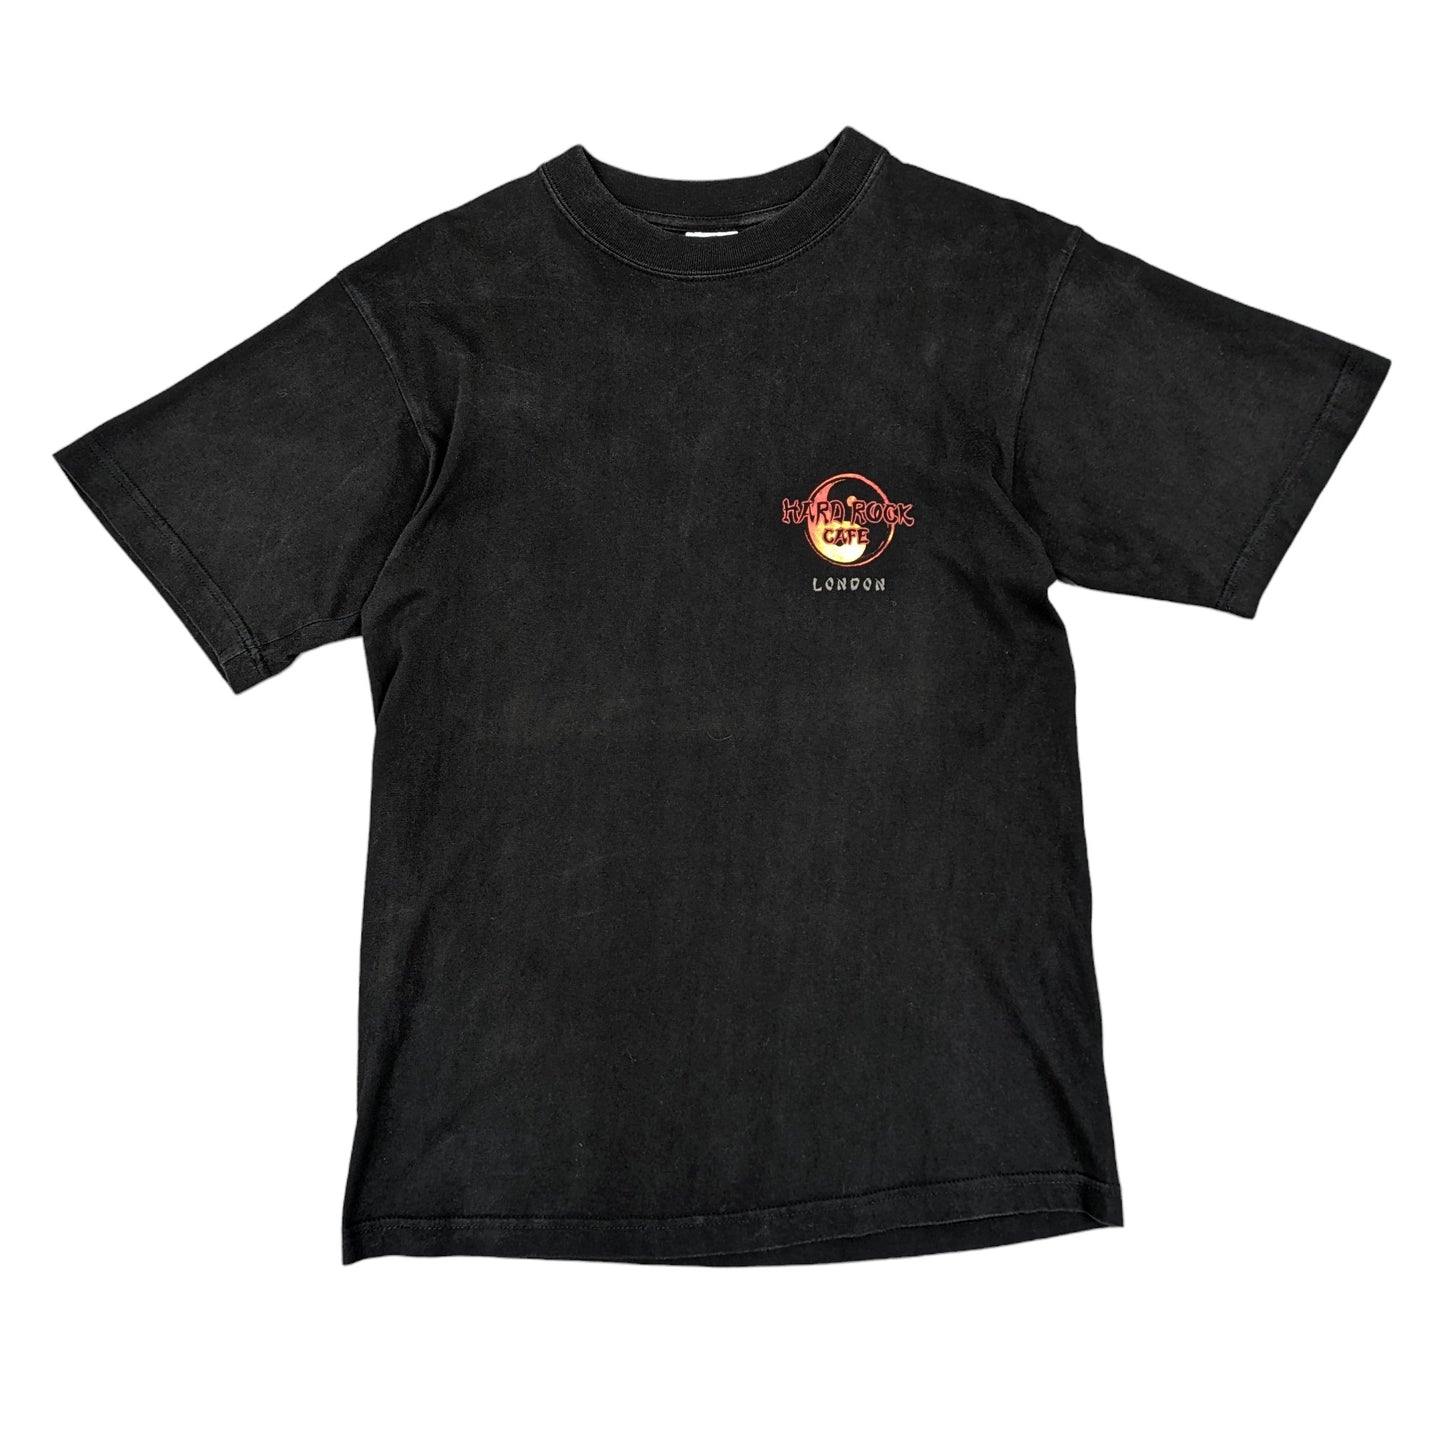 00s Hard Rock Cafe London T-Shirt Size S